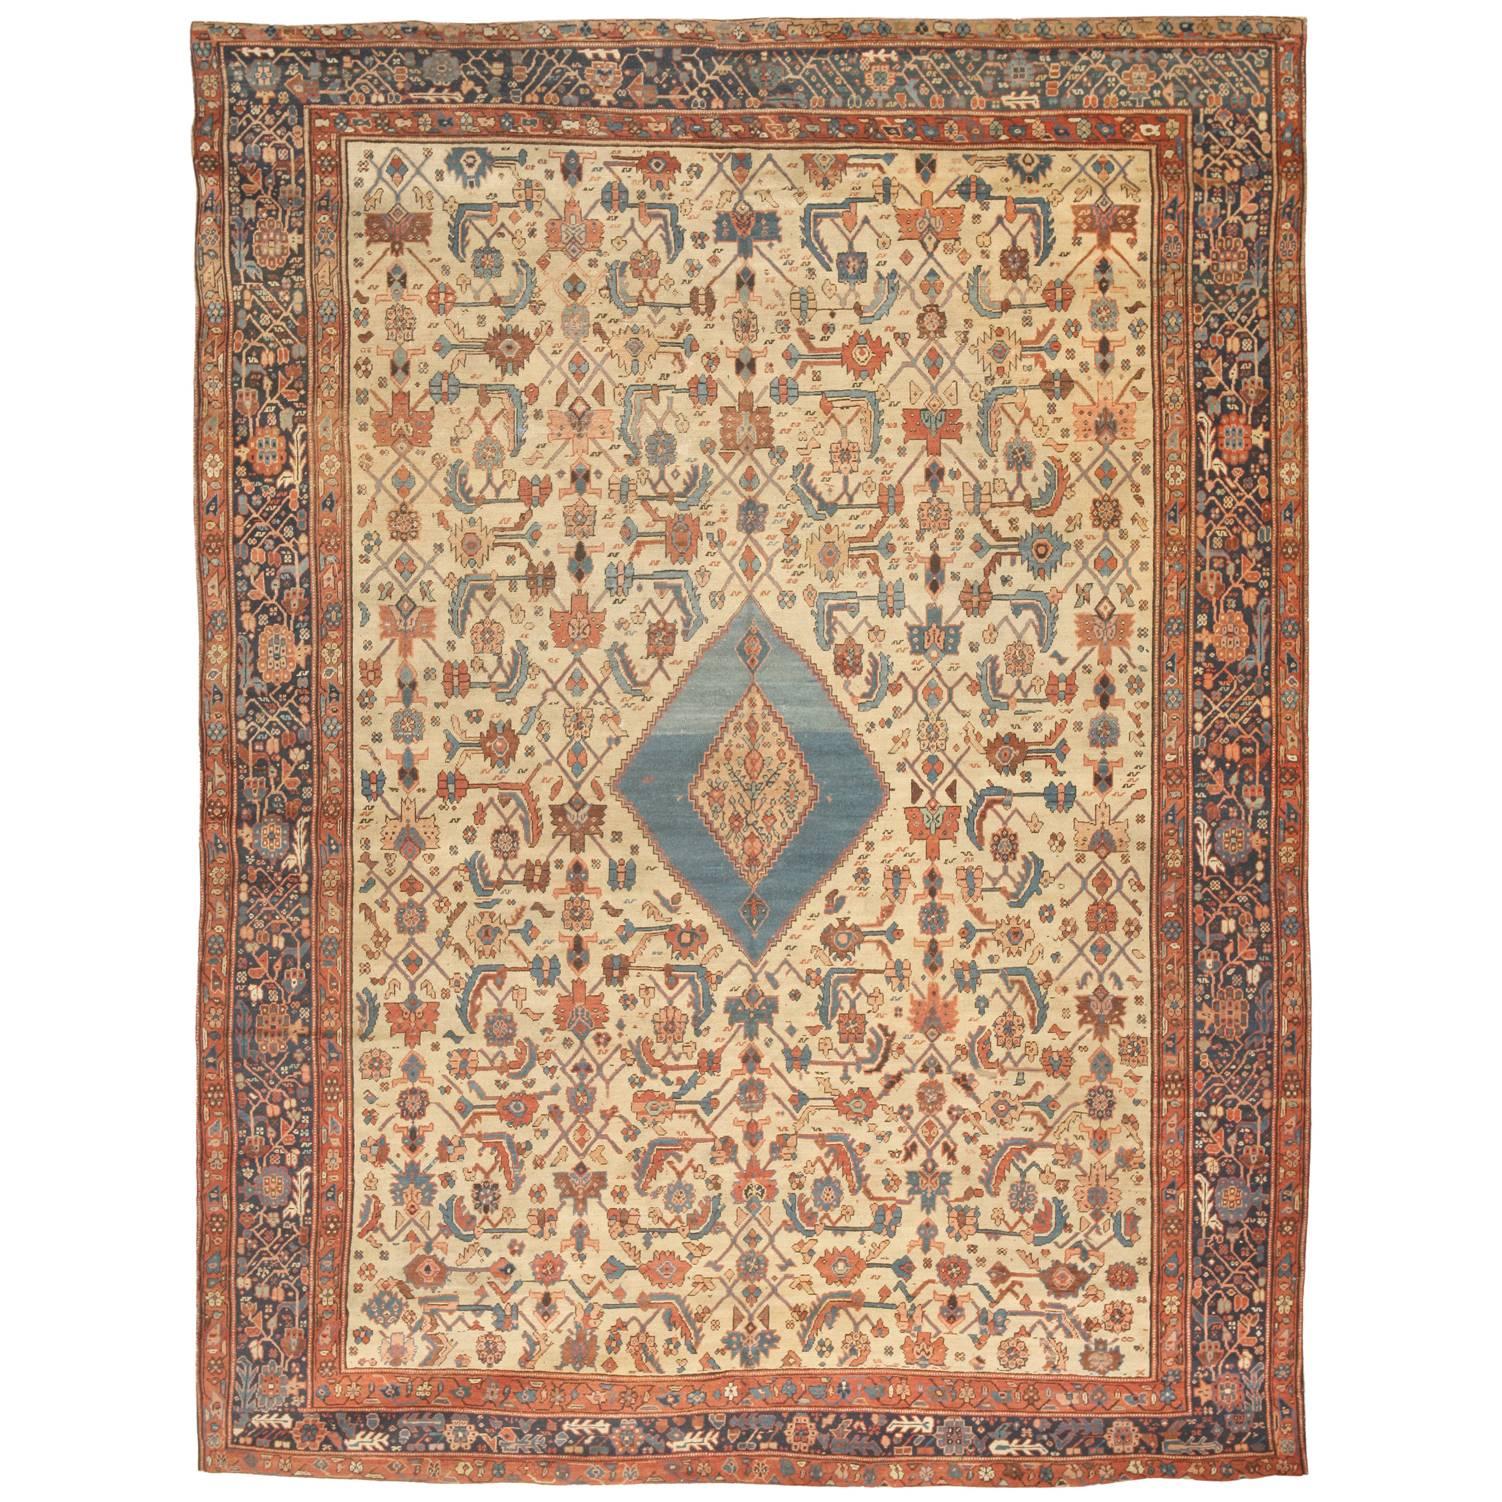 Exceptional Rare & Early Antique Persian Bakshaish Carpet For Sale